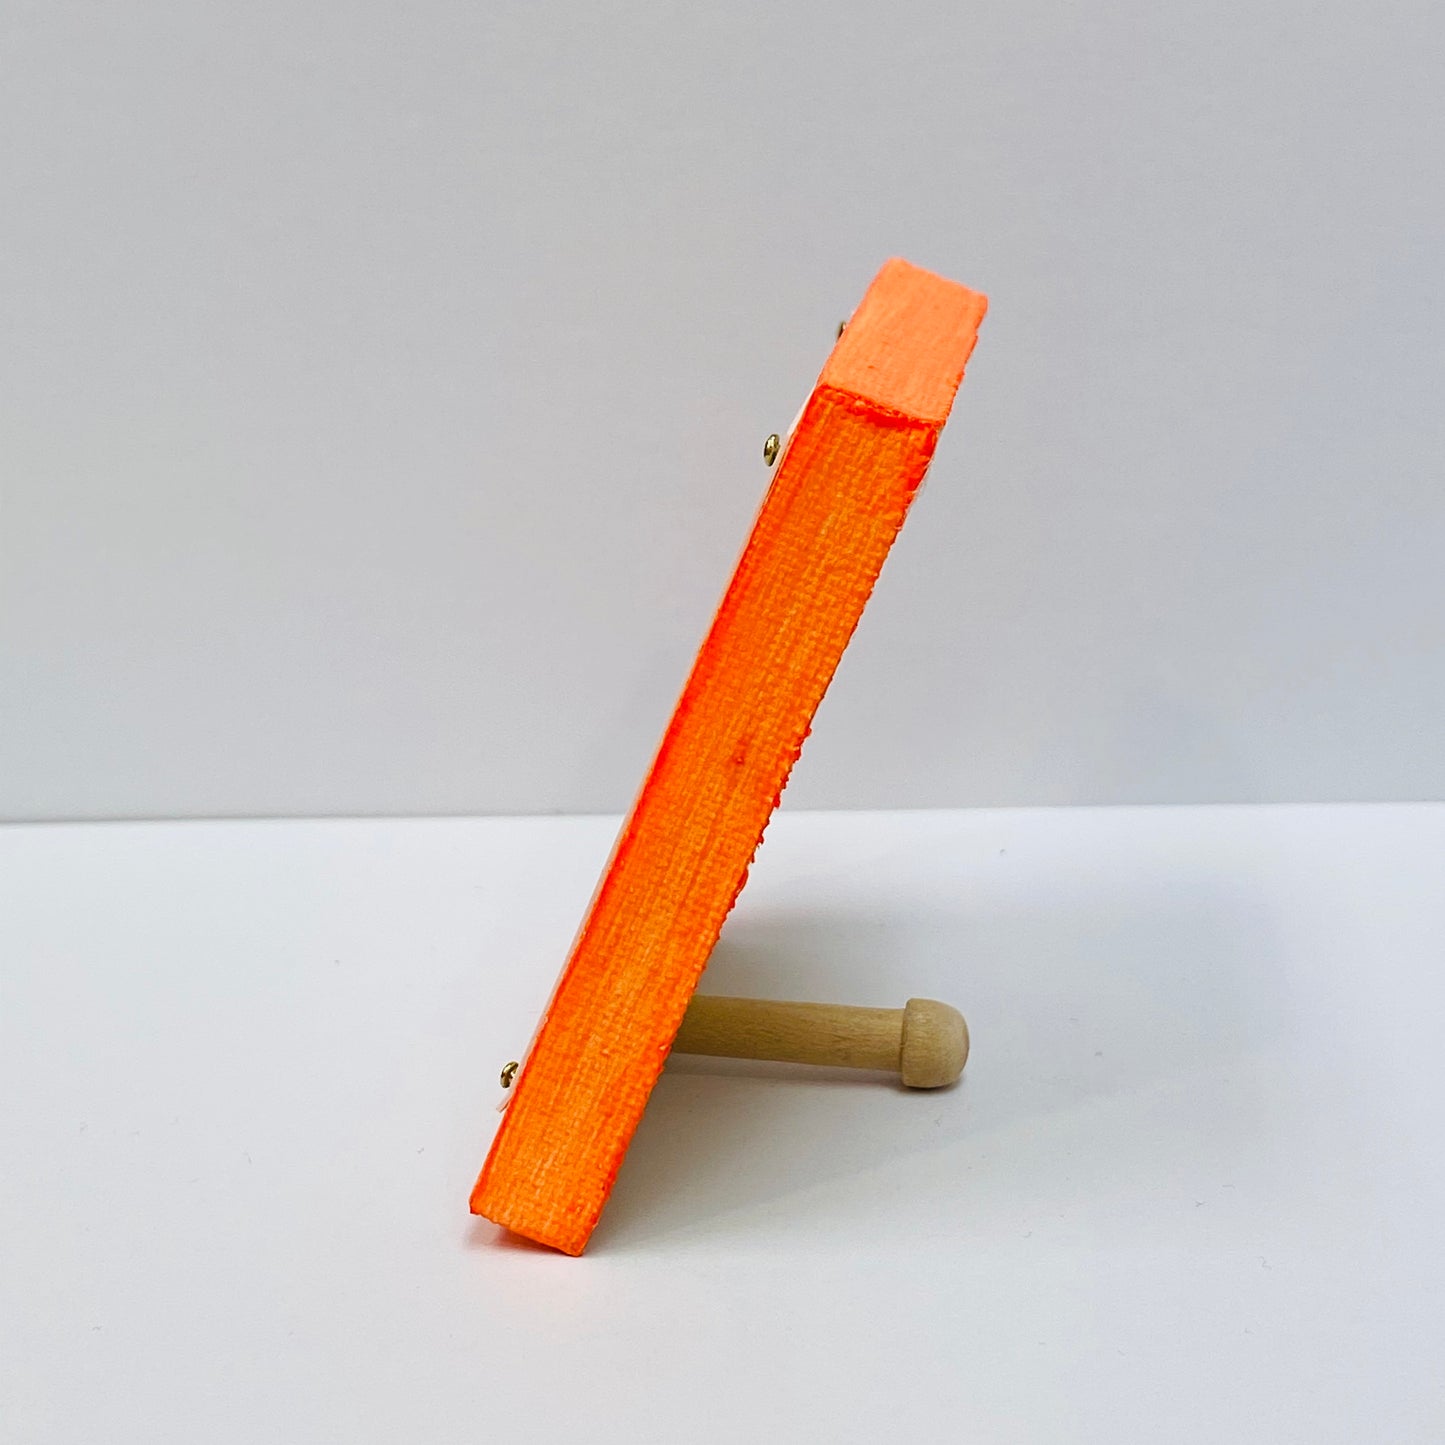 Find the Good Neon Orange Mini Inspirational Sign